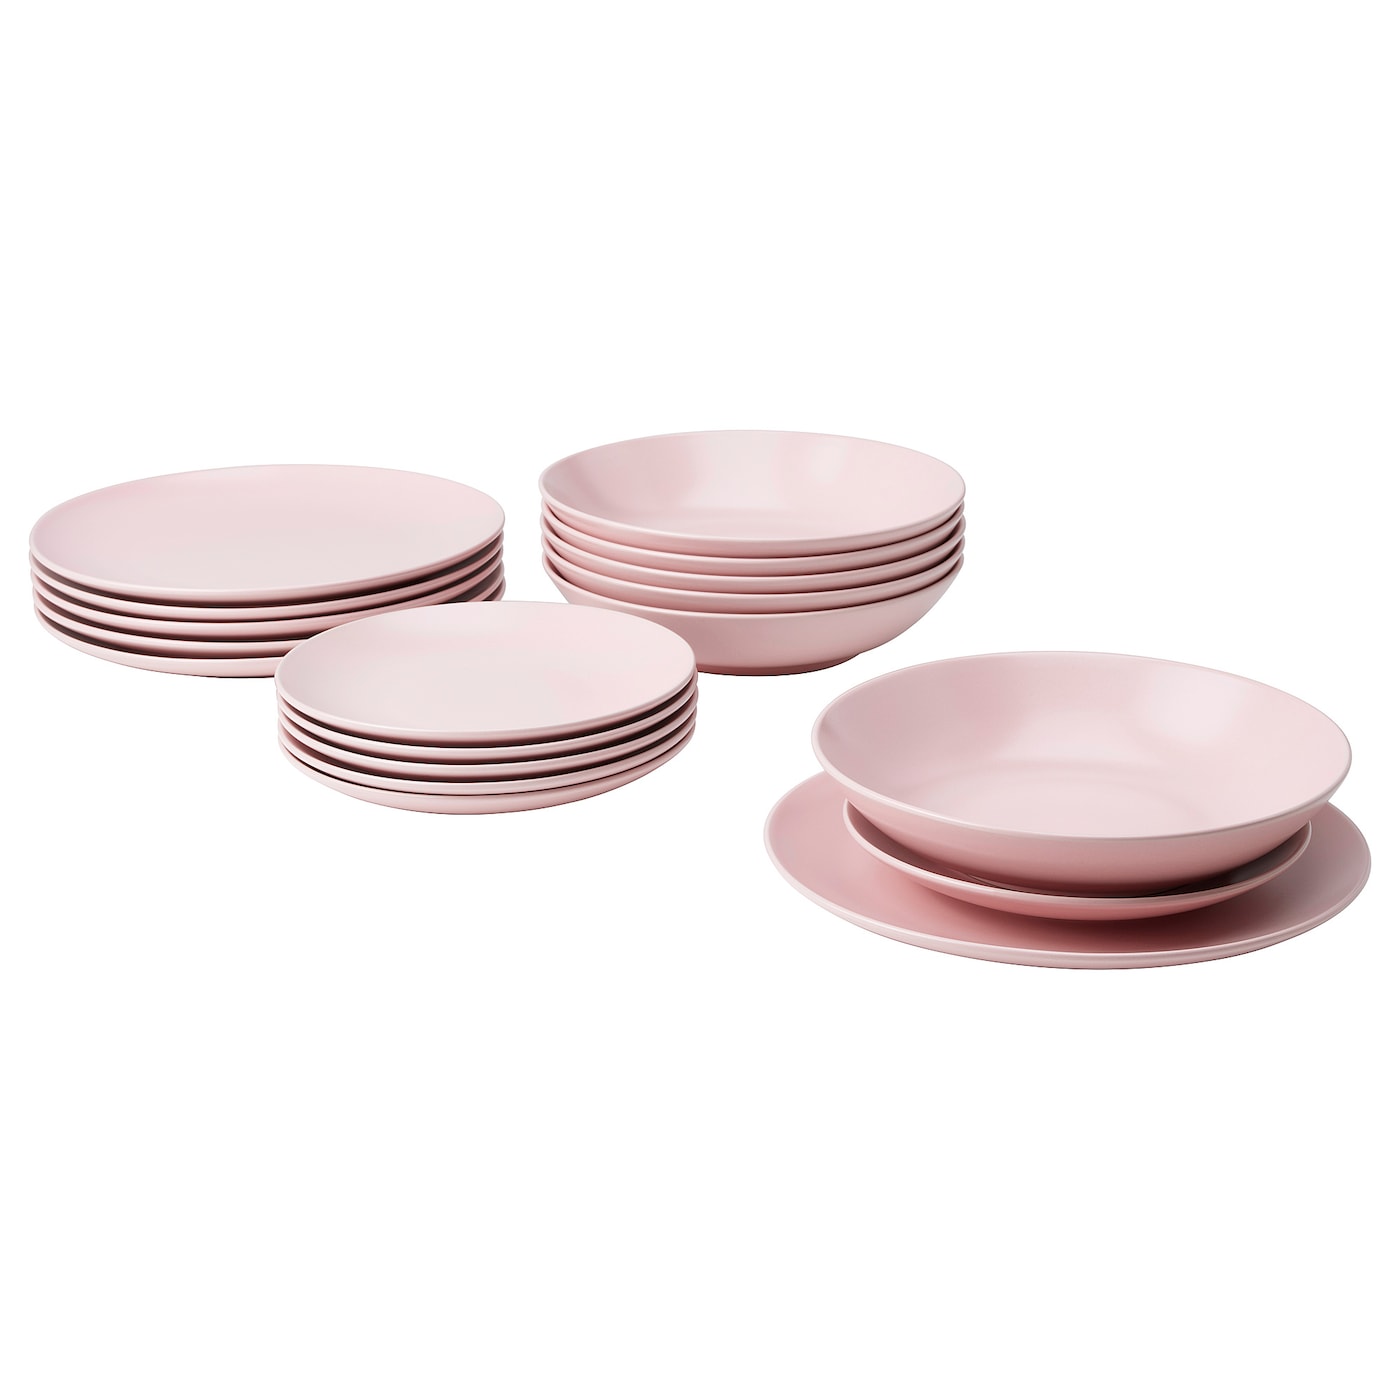 Набор посуды, 18 шт. - IKEA FÄRGKLAR/FARGKLAR, светло-розовый, ФЭРГКЛАР ИКЕА